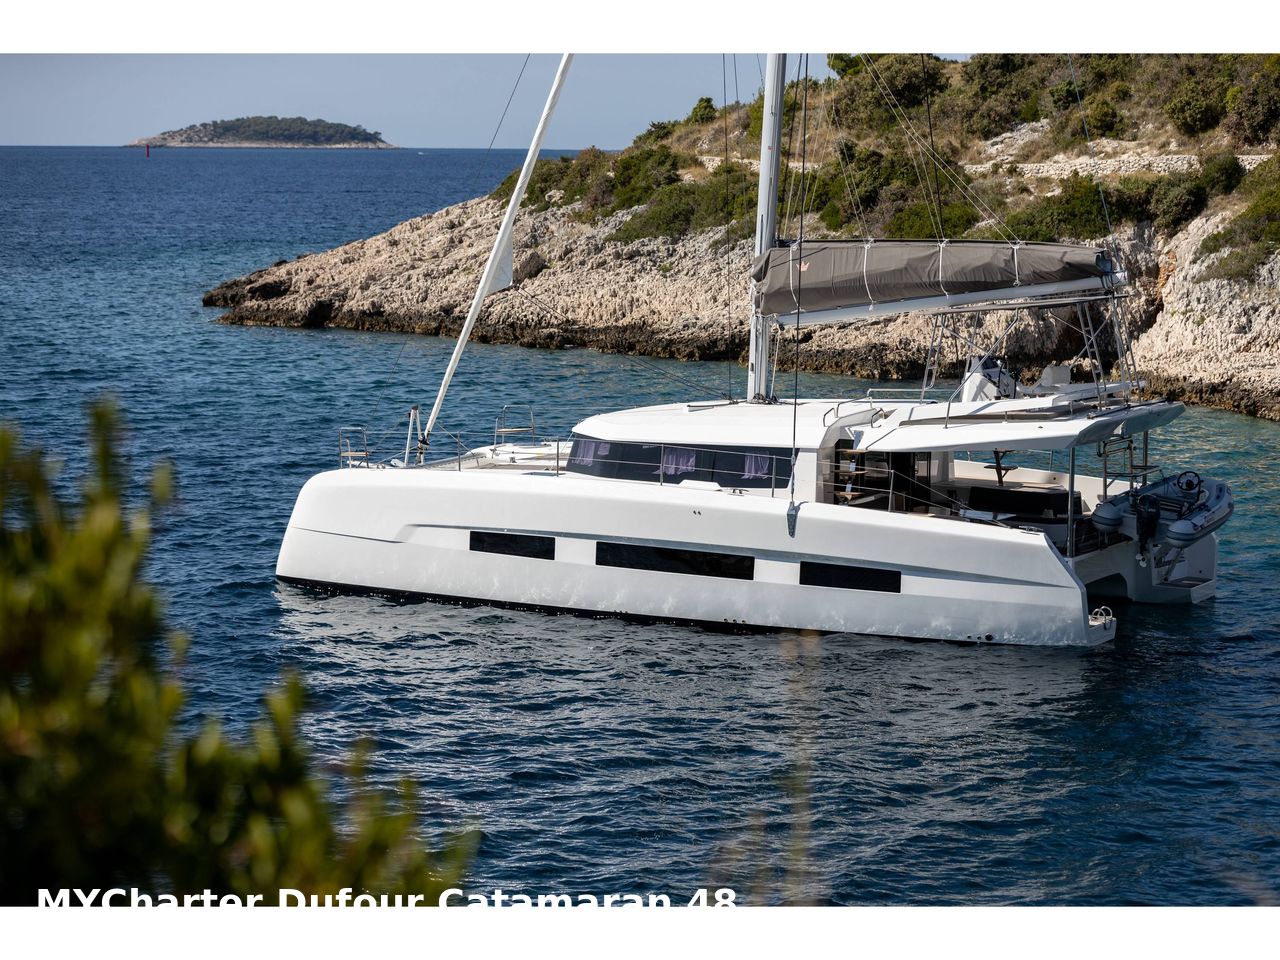 Dufour Catamaran 48 5c+5h - zdjęcie 1